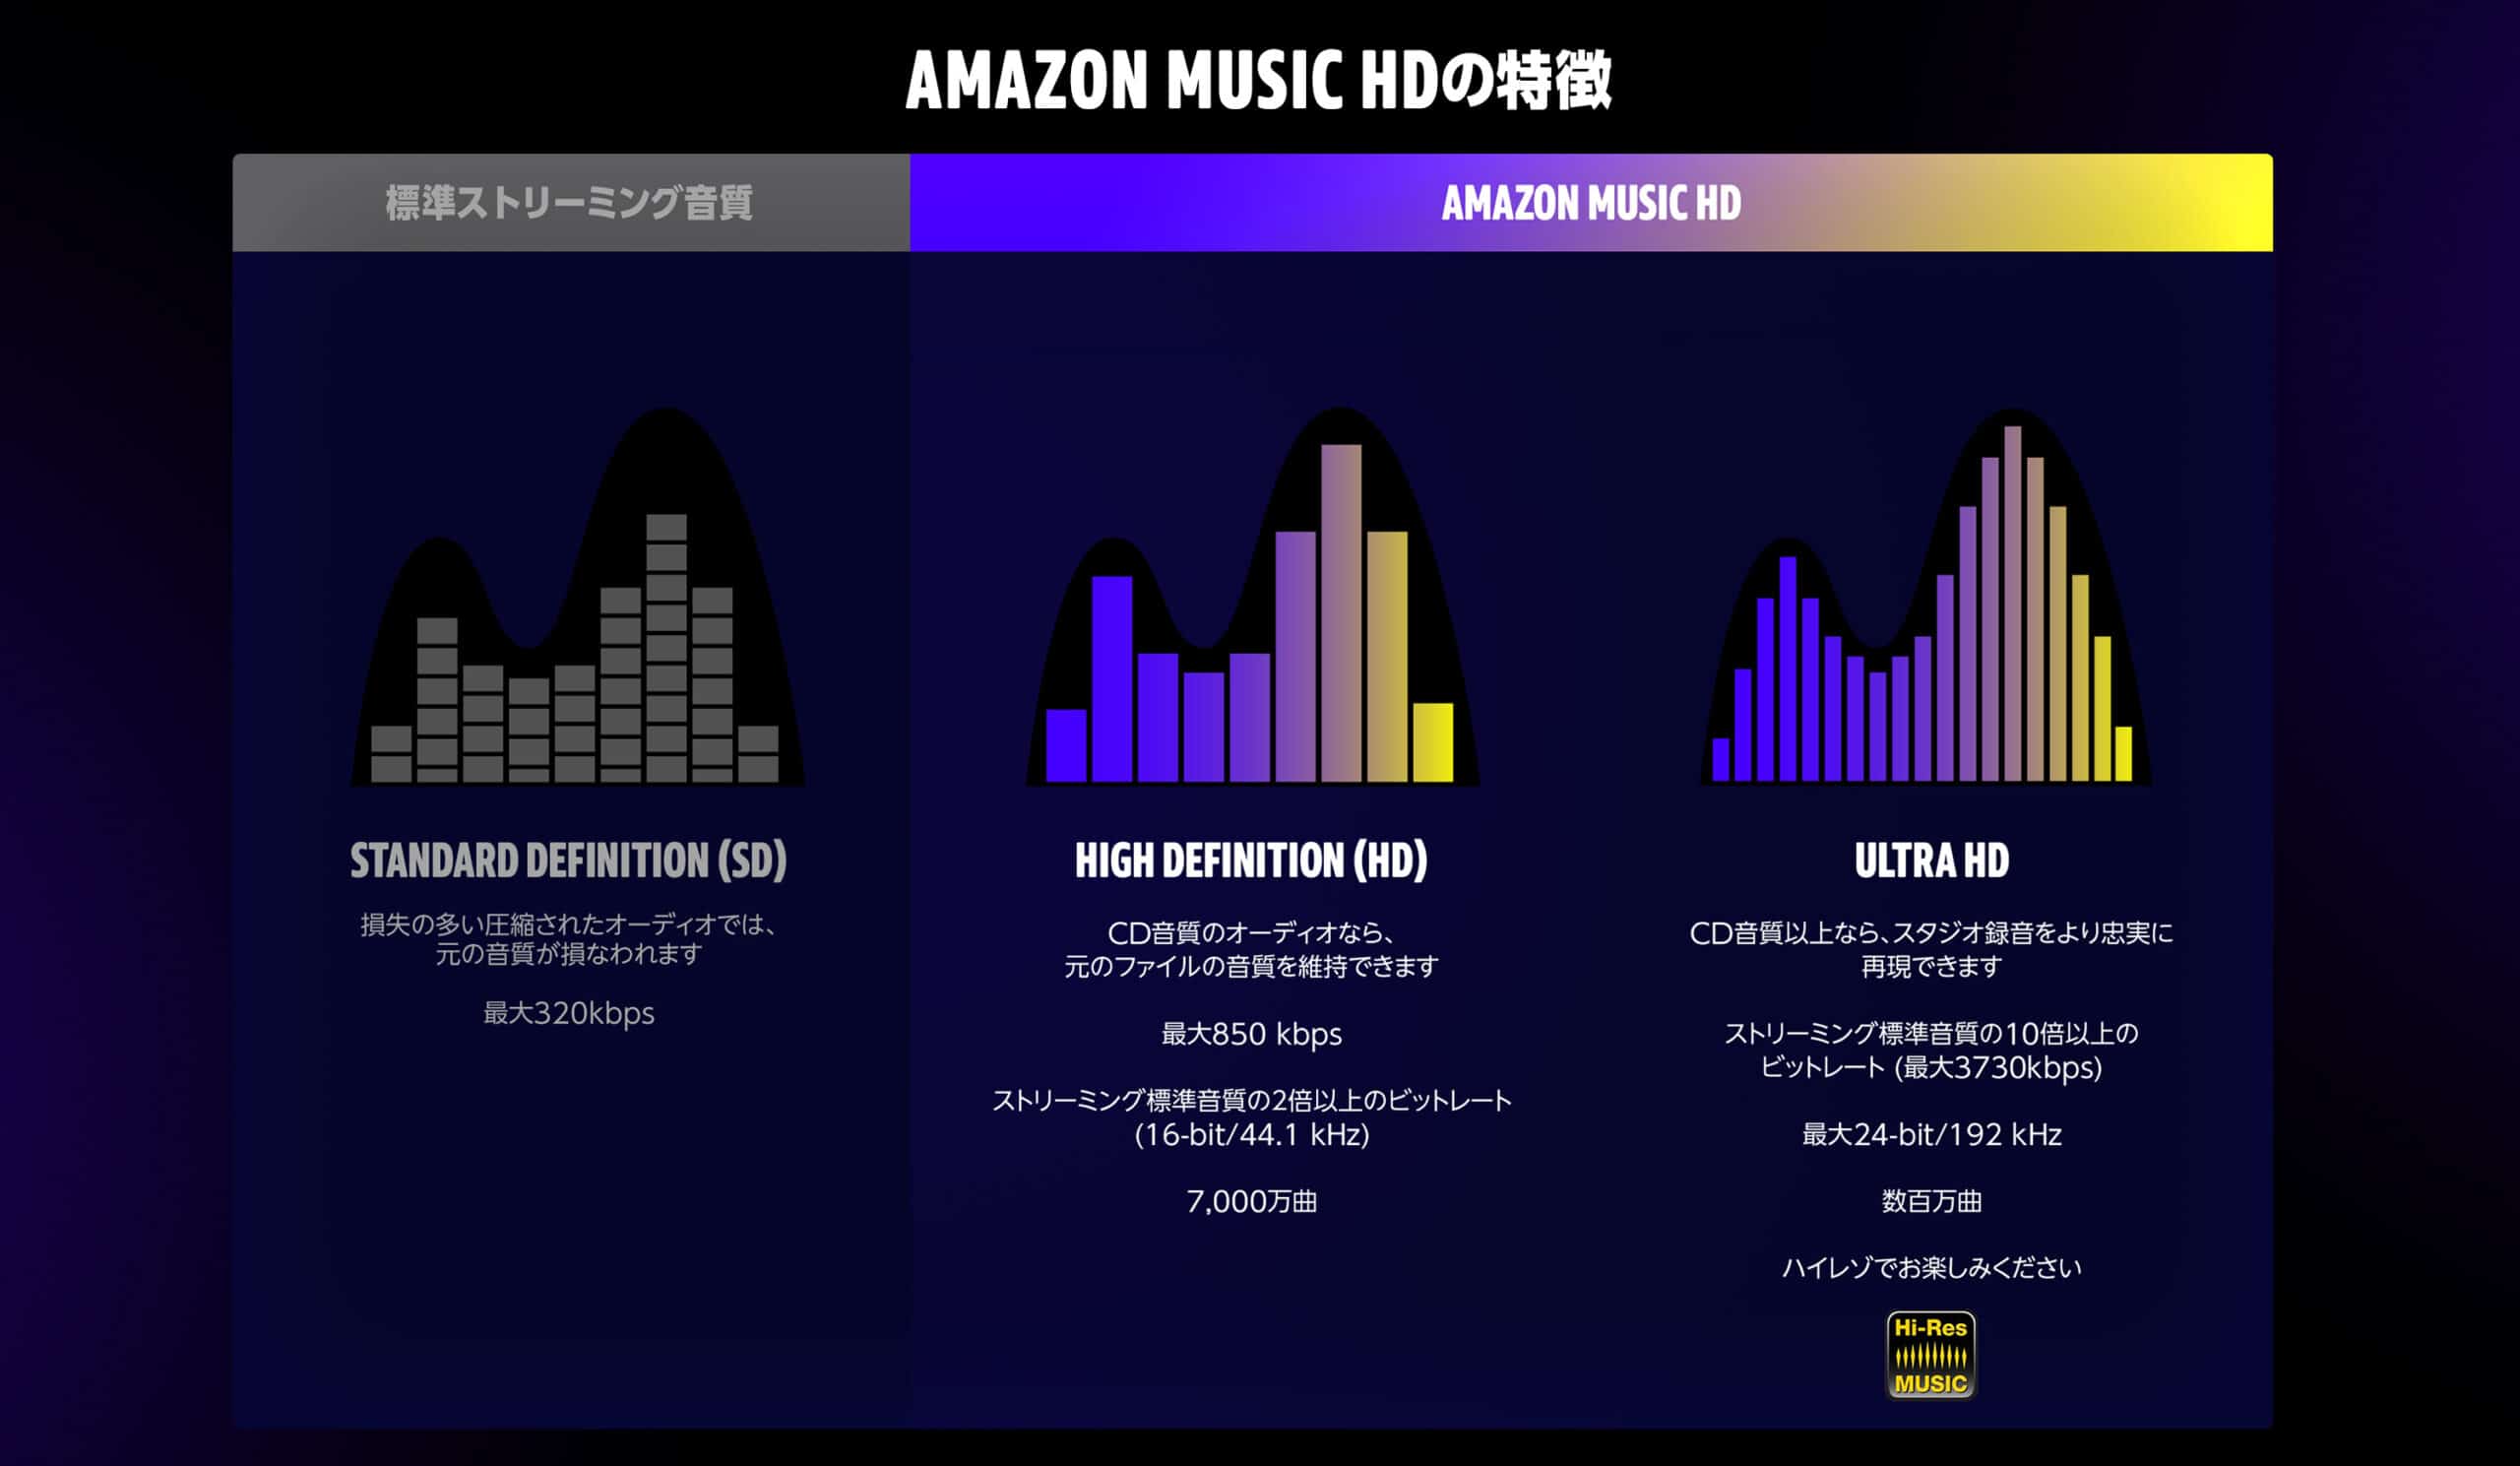 Amazon Music HD 解説